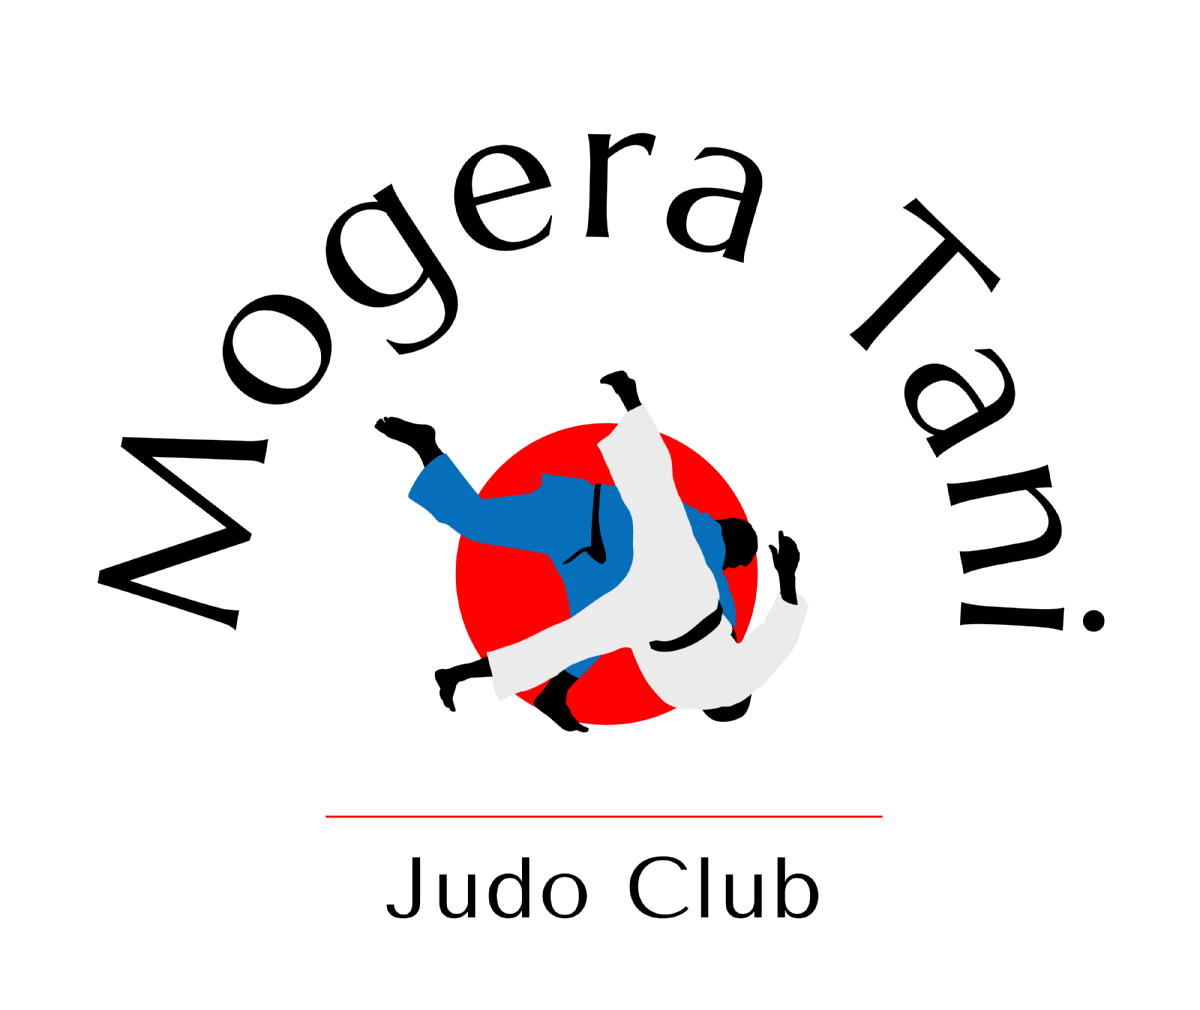 Mogera Tani Judo Club logo, image of one judo player in dark blue judogi throwing a judoka in a white judogi